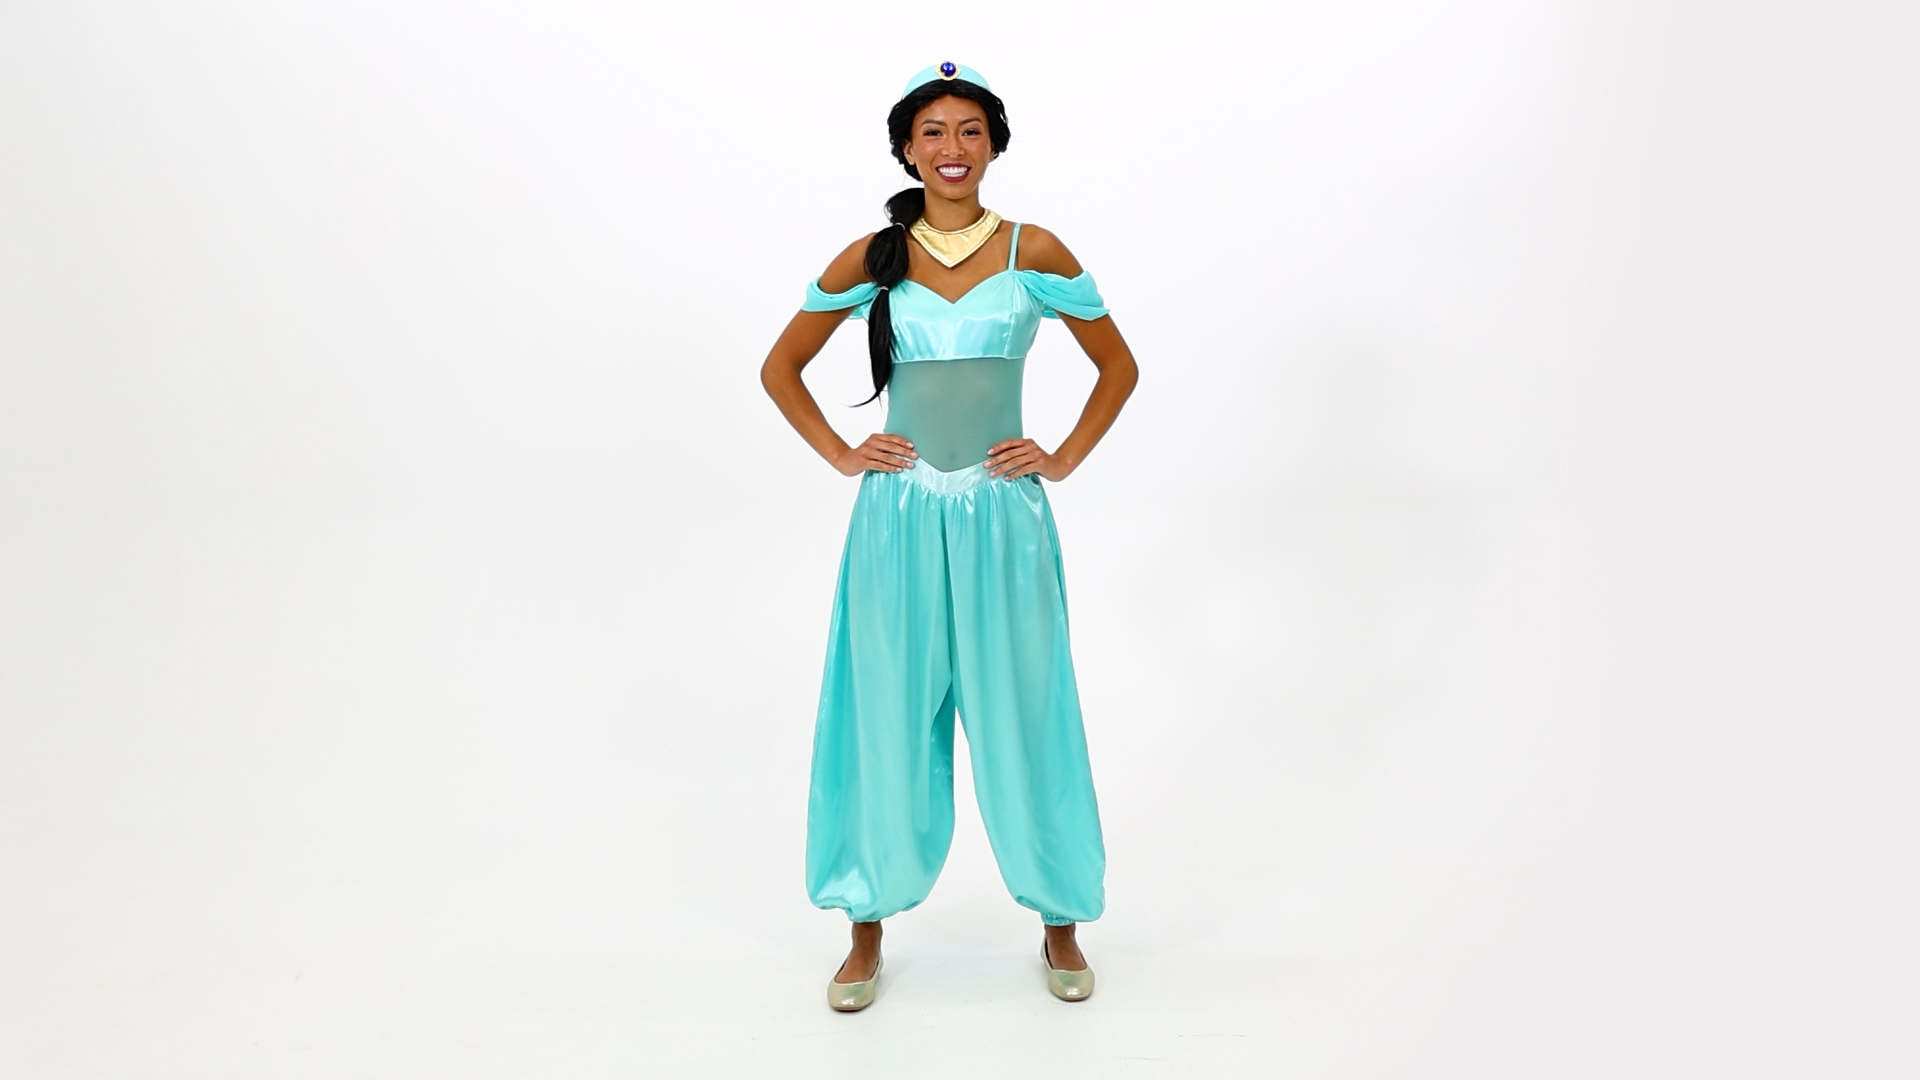 Plus Size Disney Aladdin Jasmine Women's Costume